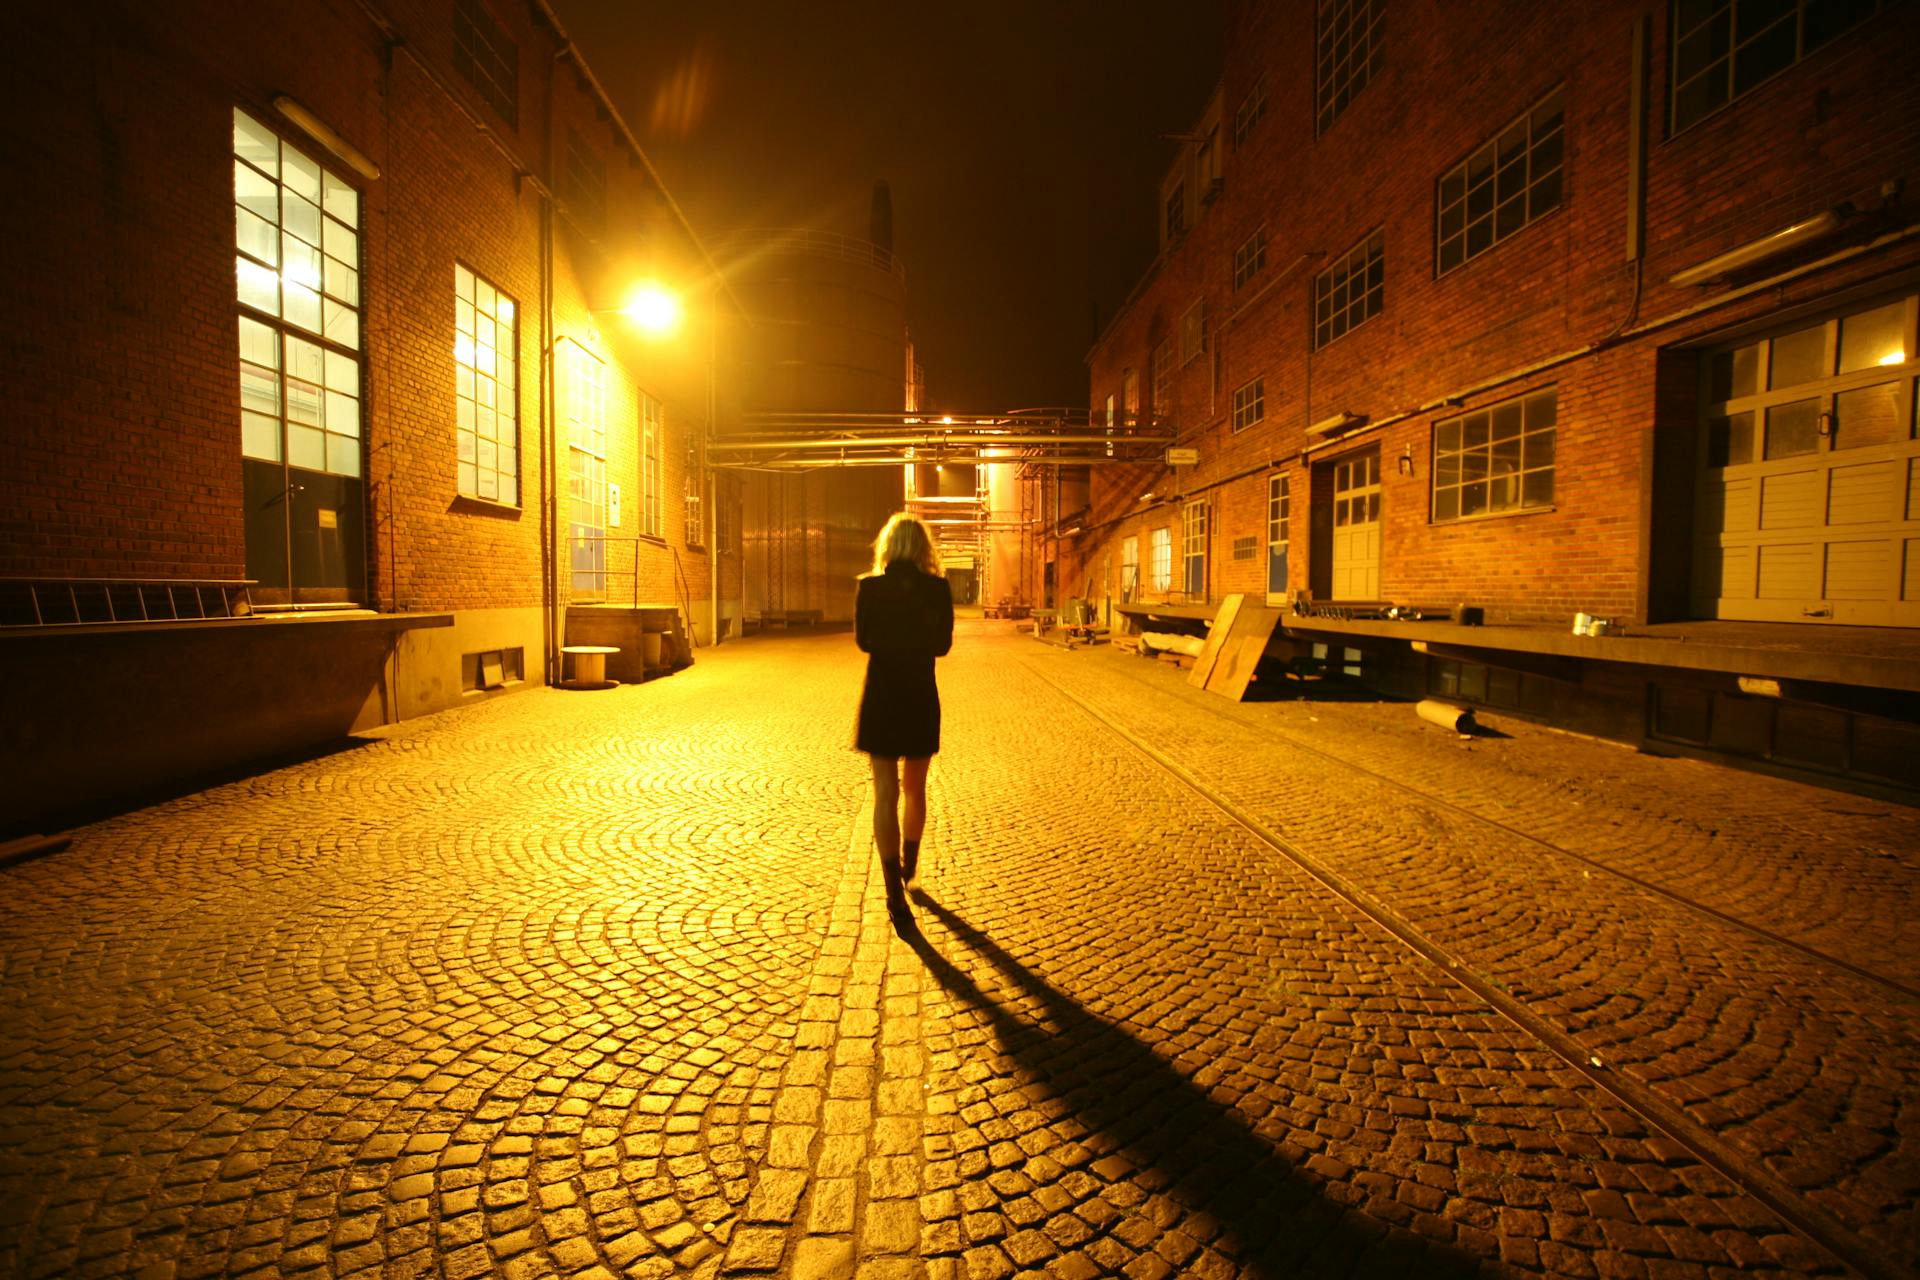 A woman walking down the street | Source: Pexels